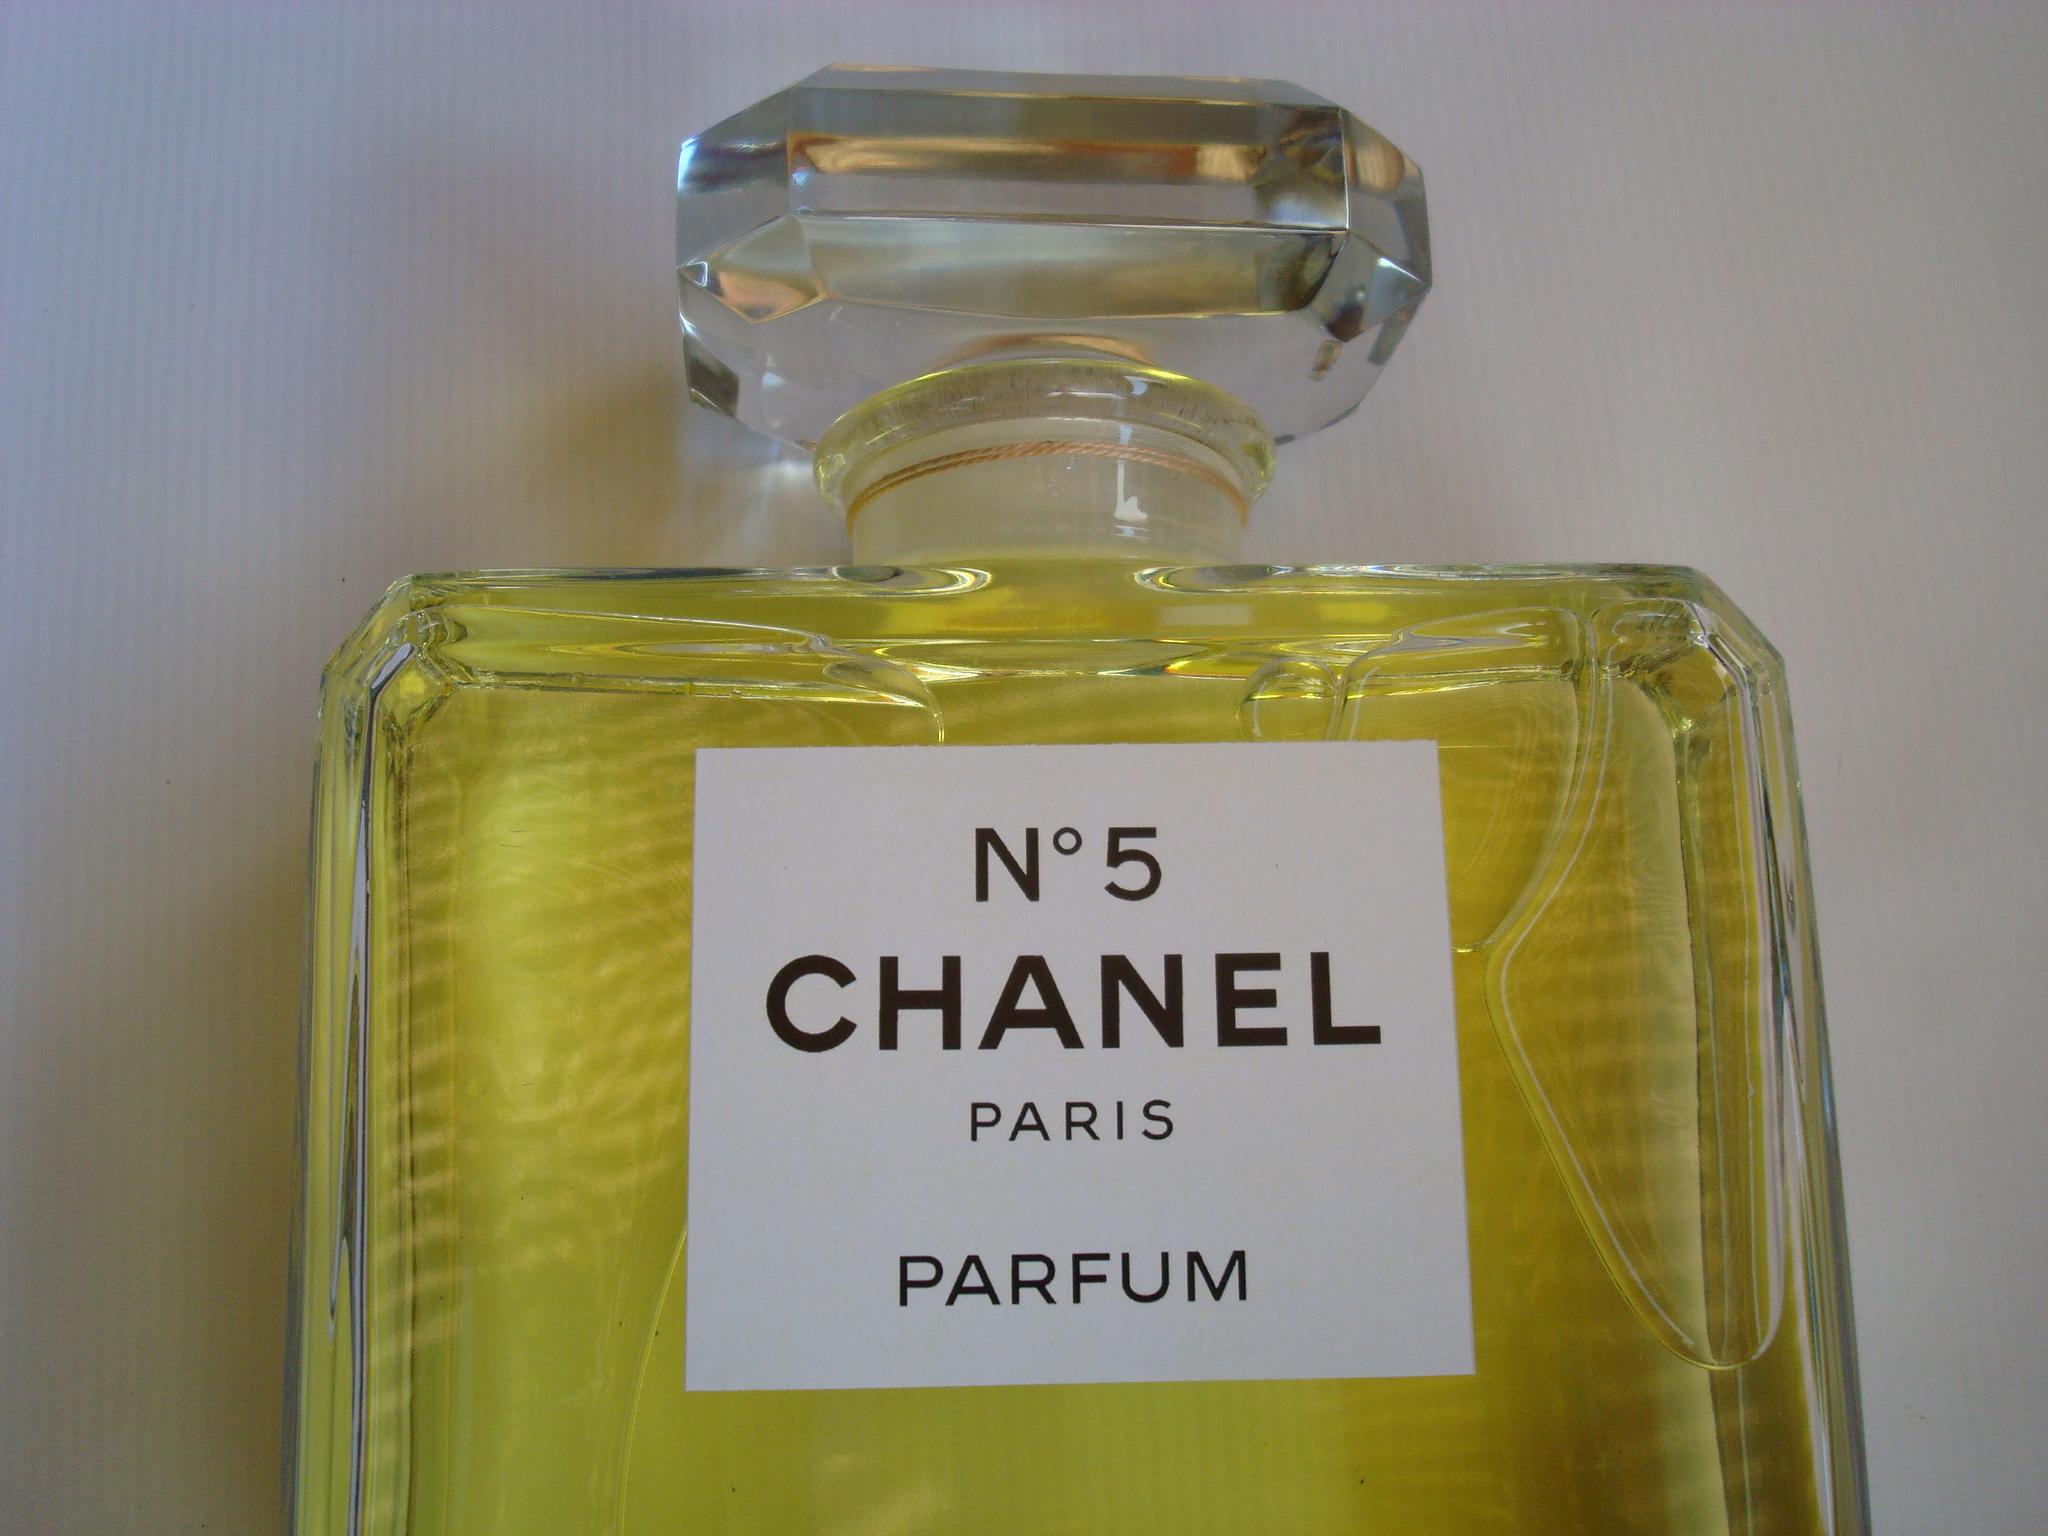 Chanel N5 Huge Store Display Perfume Bottle Advertising, France, 20th Century 4